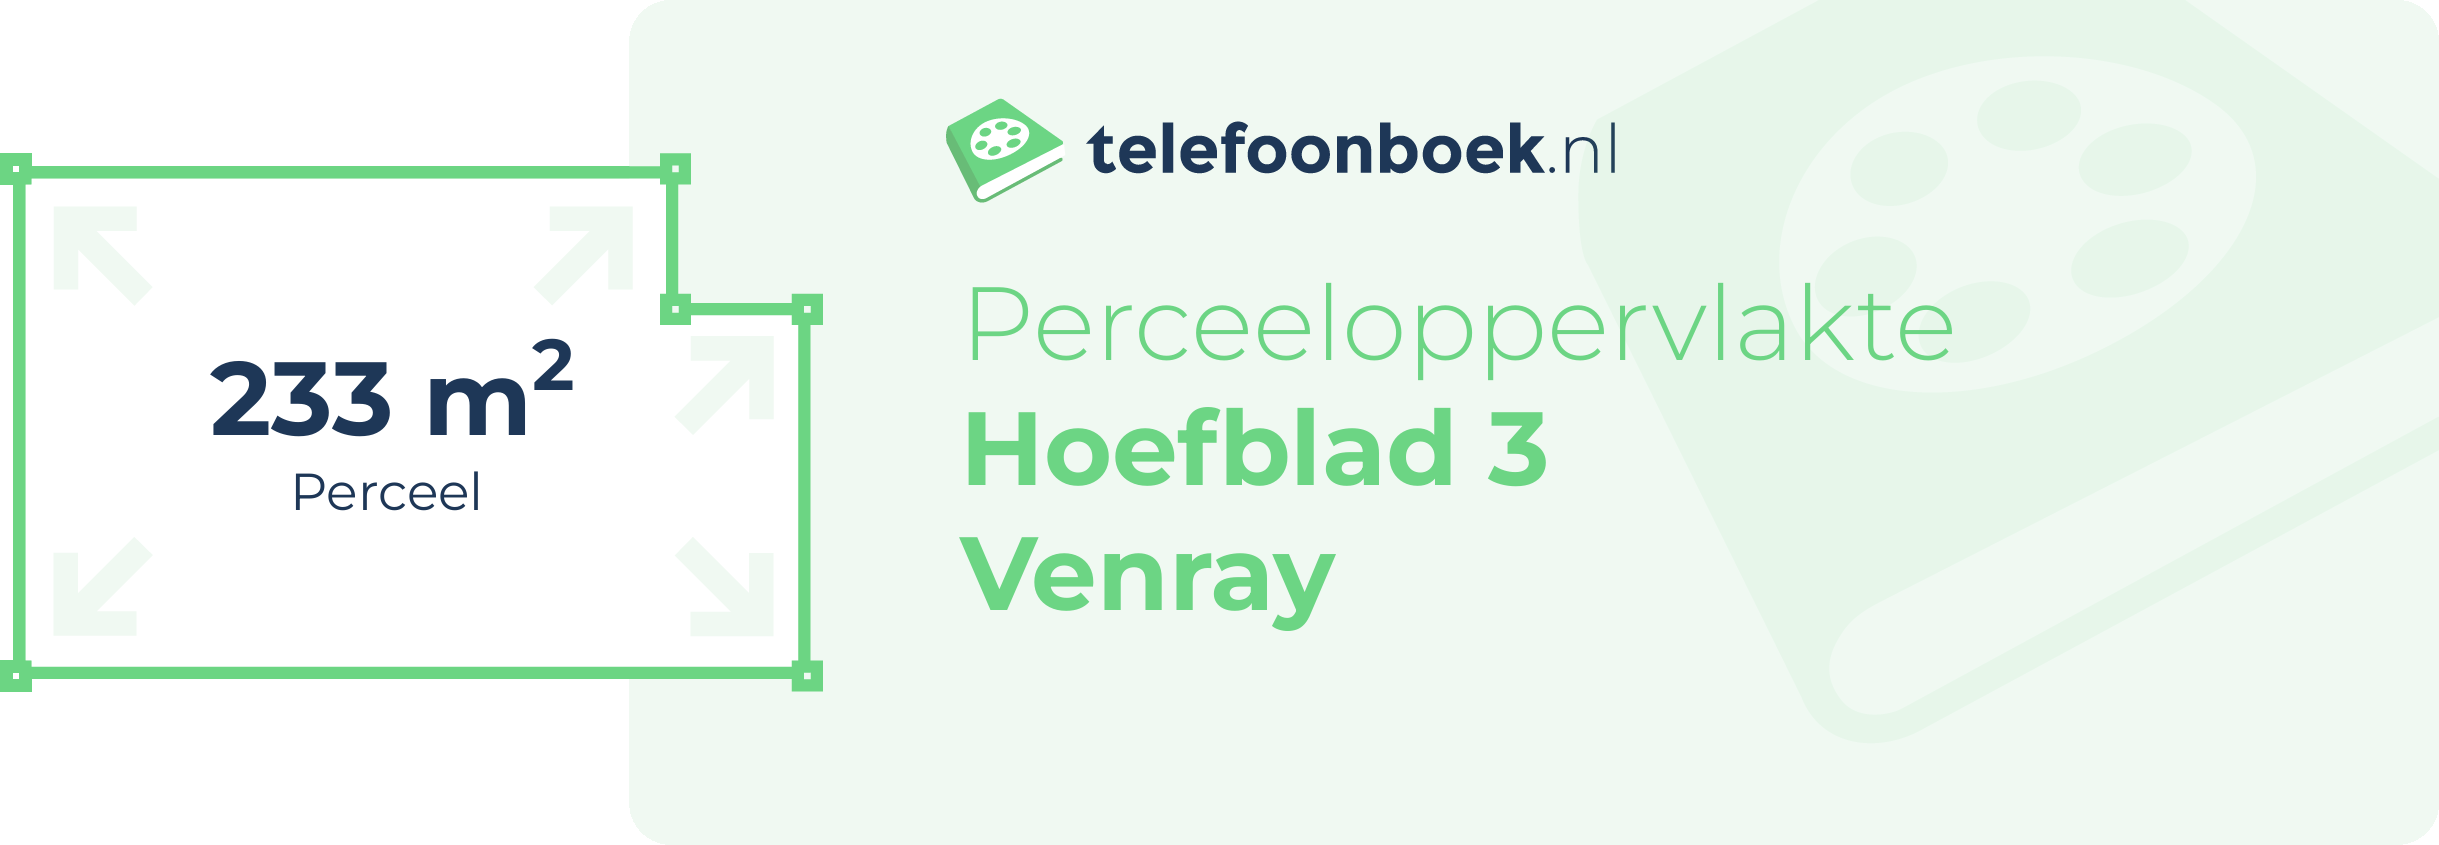 Perceeloppervlakte Hoefblad 3 Venray